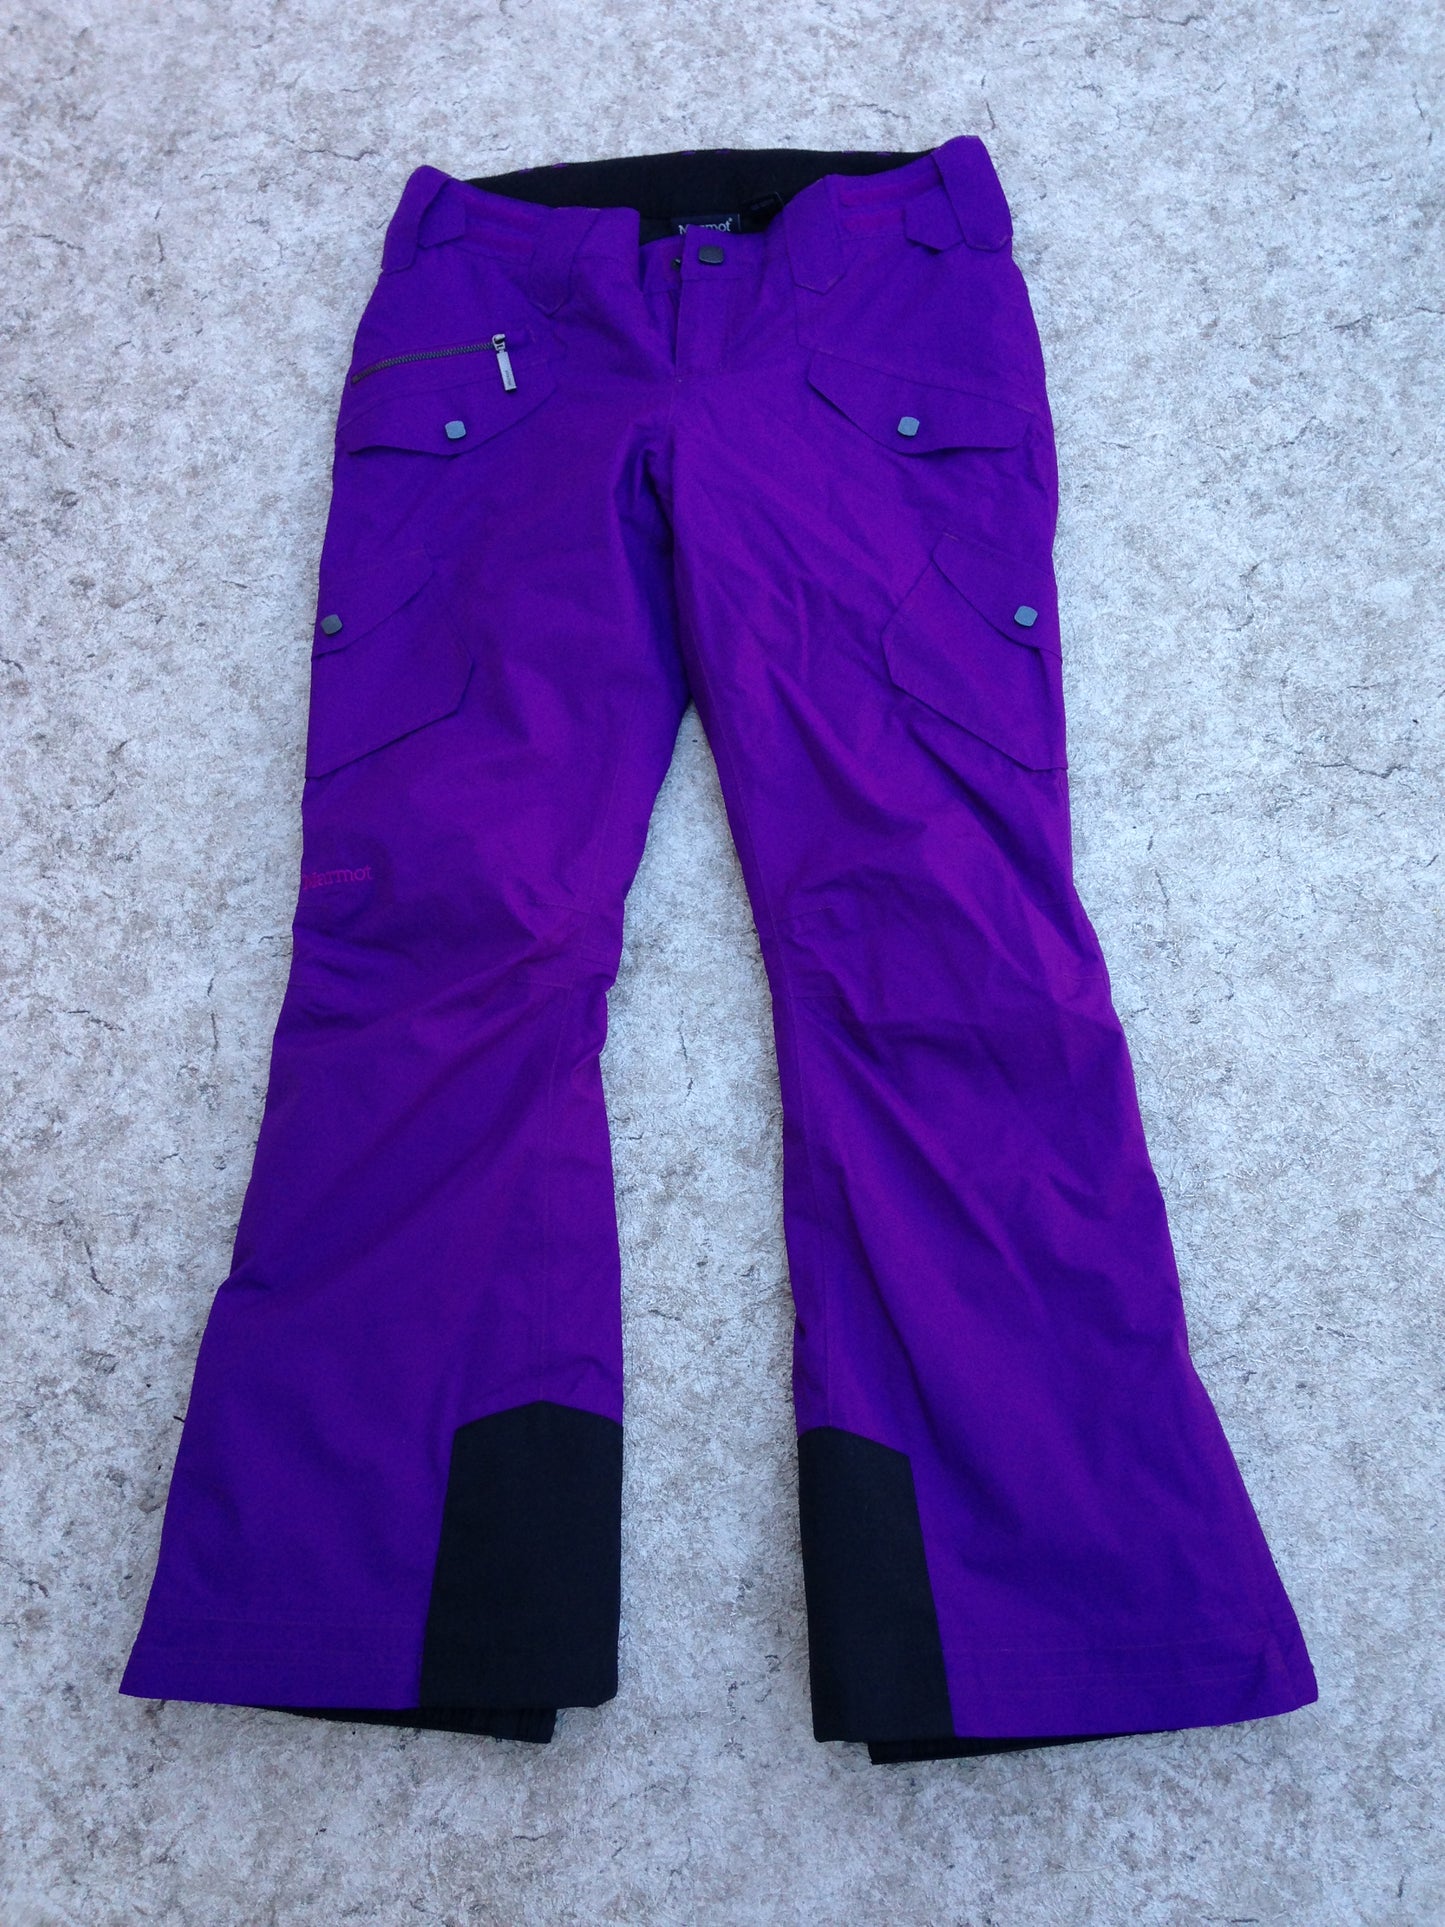 Snow Pants Ladies Small Marmot Outstanding Quality Purple Snowboarding Adjustable Waist New Demo Model